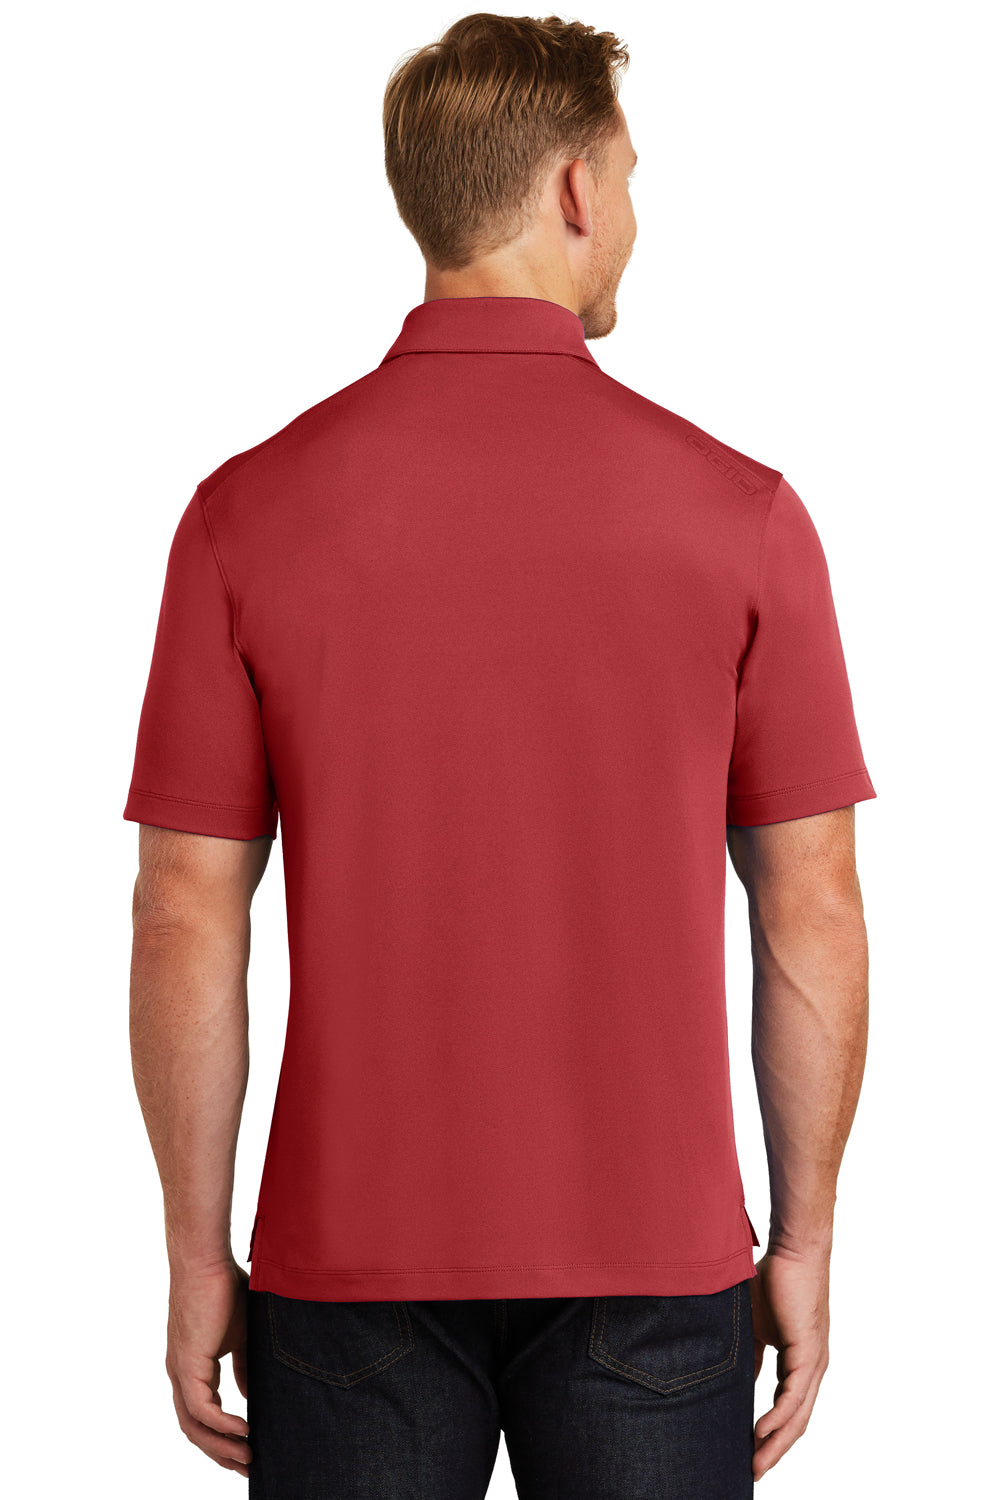 Ogio OG131 Mens Fuse Moisture Wicking Short Sleeve Polo Shirt w/ Pocket Red Back